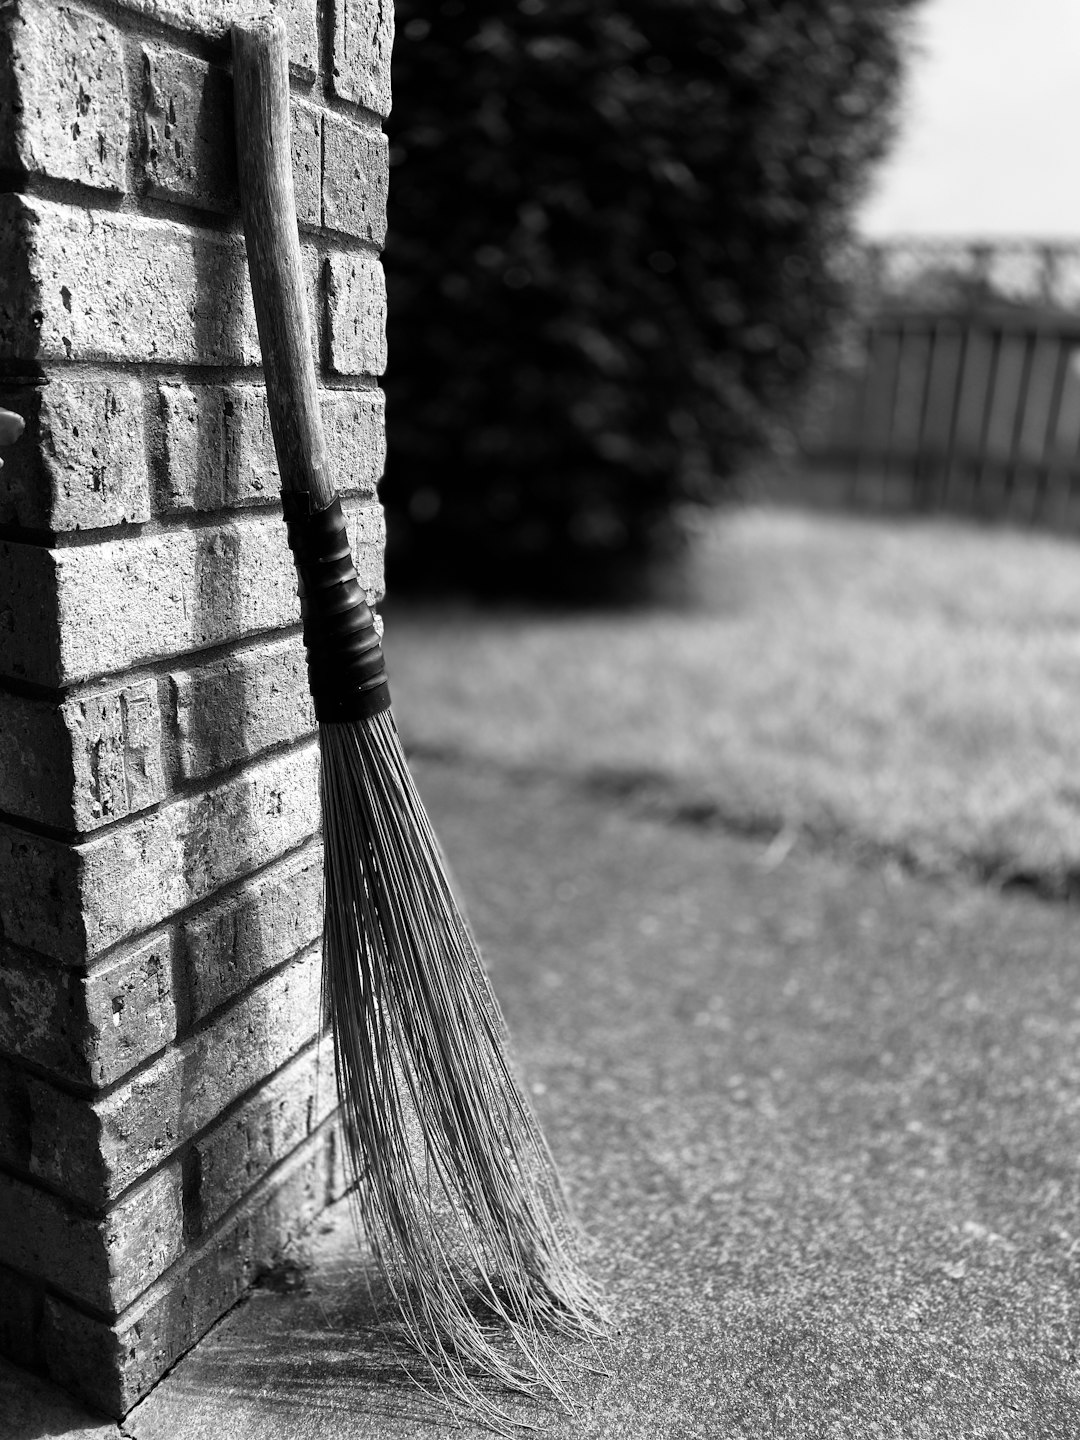  broom place near wall broom